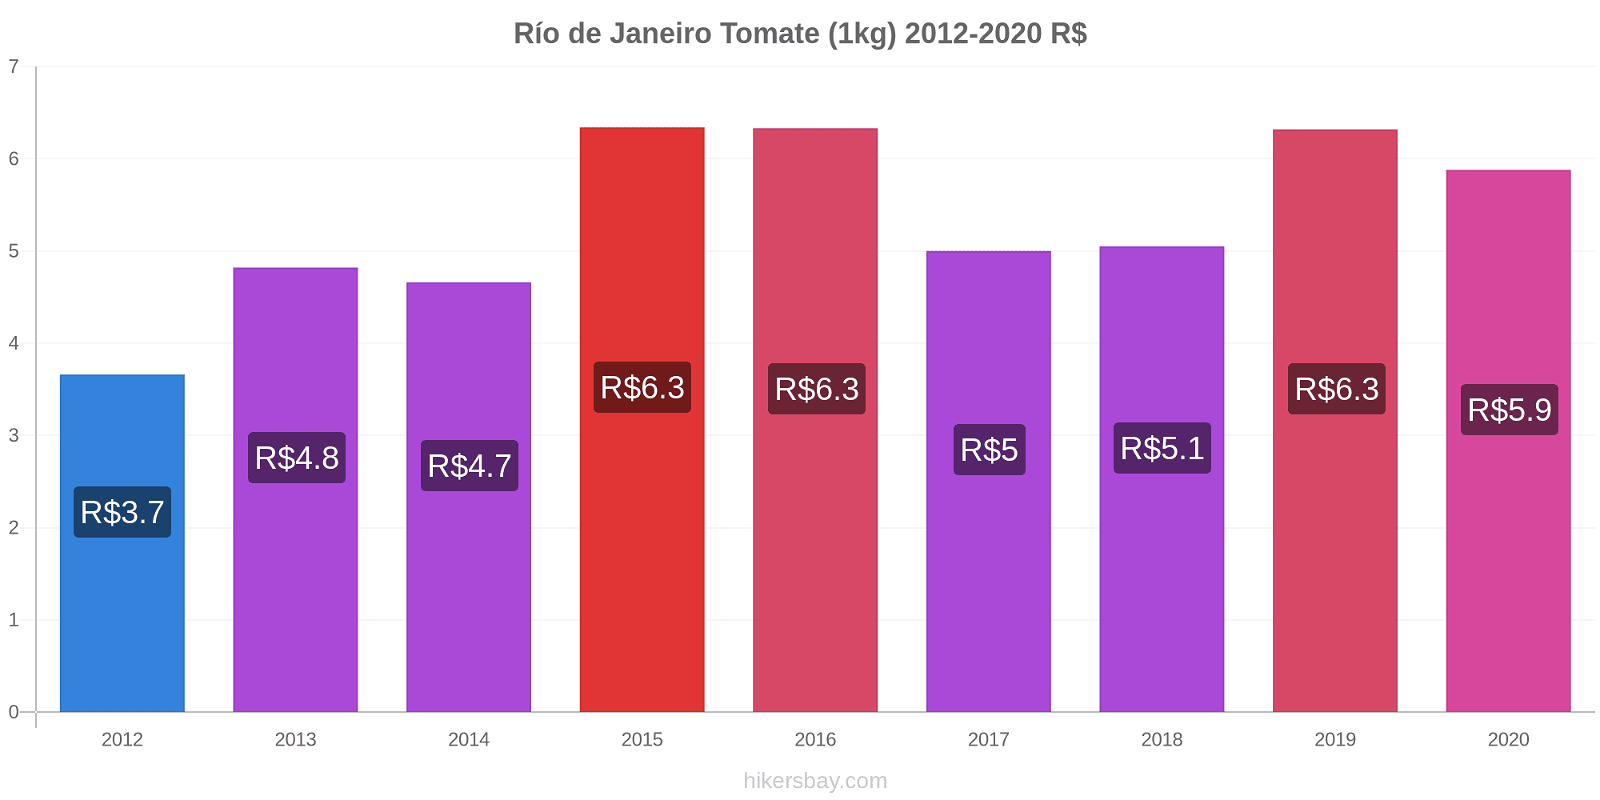 Río de Janeiro cambios de precios Tomate (1kg) hikersbay.com